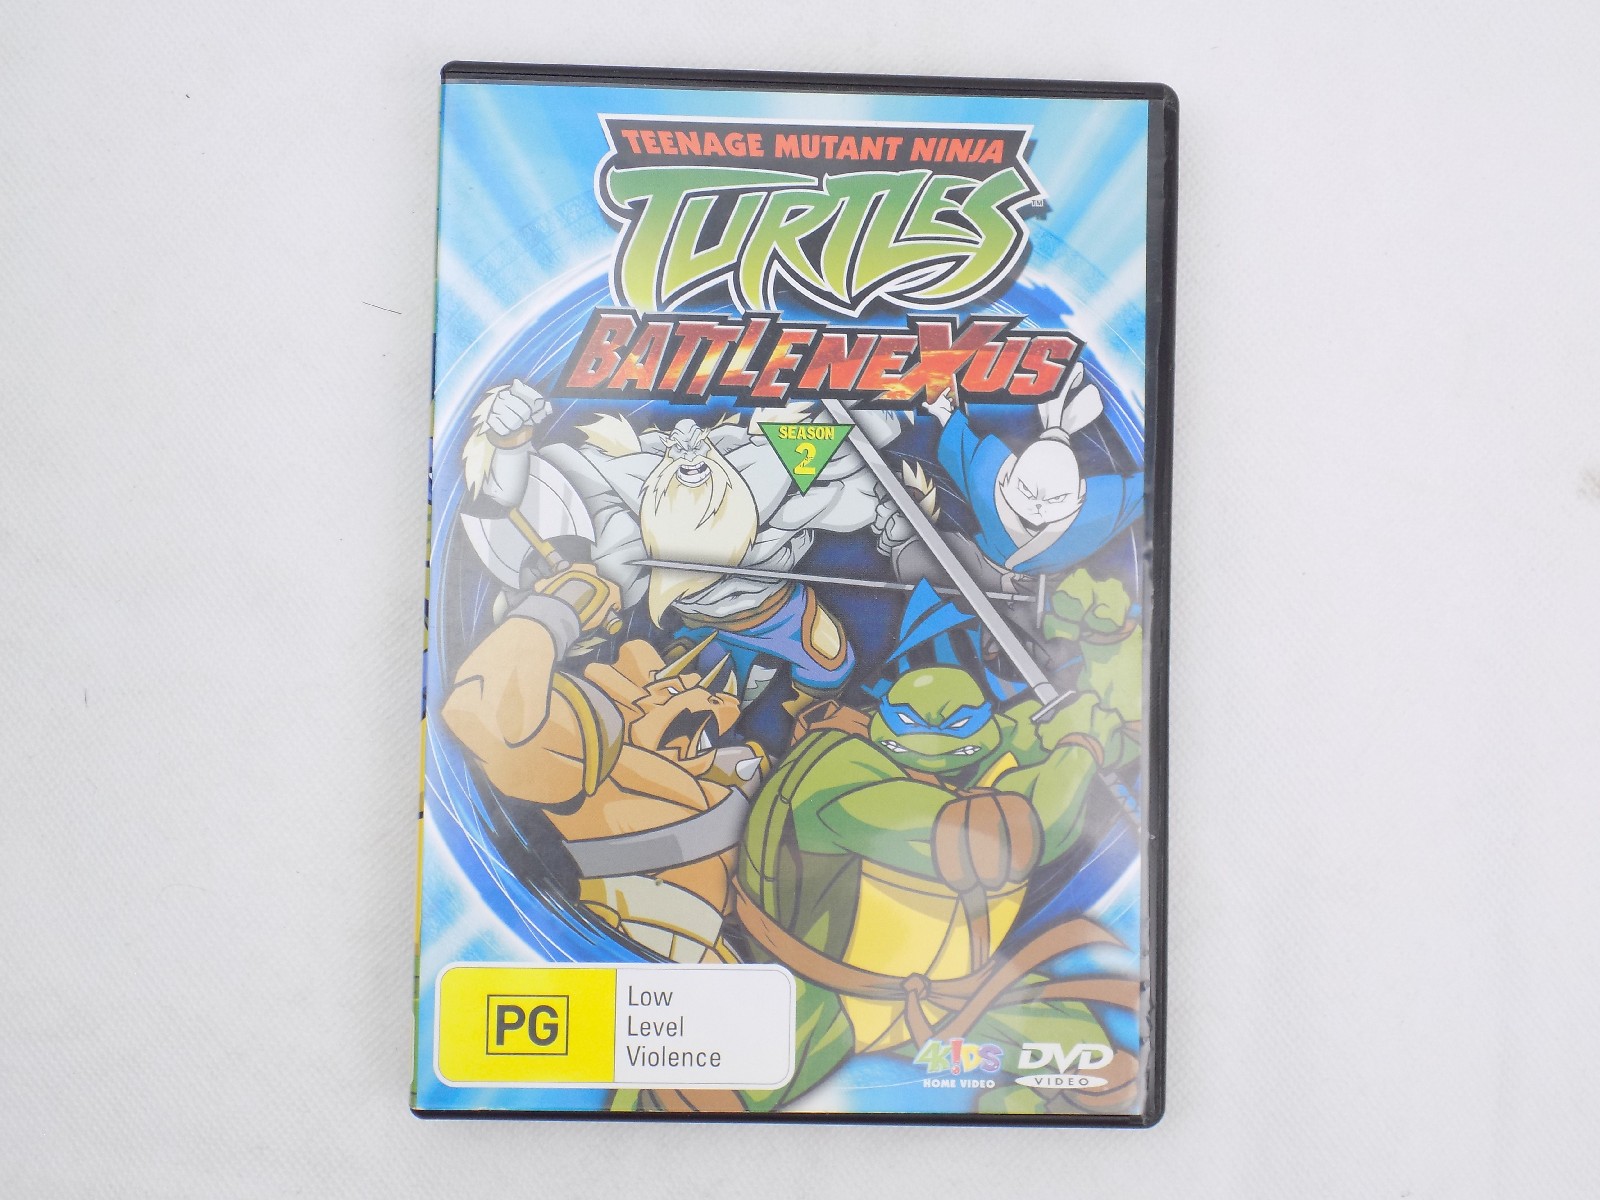 Mint Disc Teenage Mutant Ninja Turtles TMNT Battle Nexus Season 2 DVD -  Starboard Games